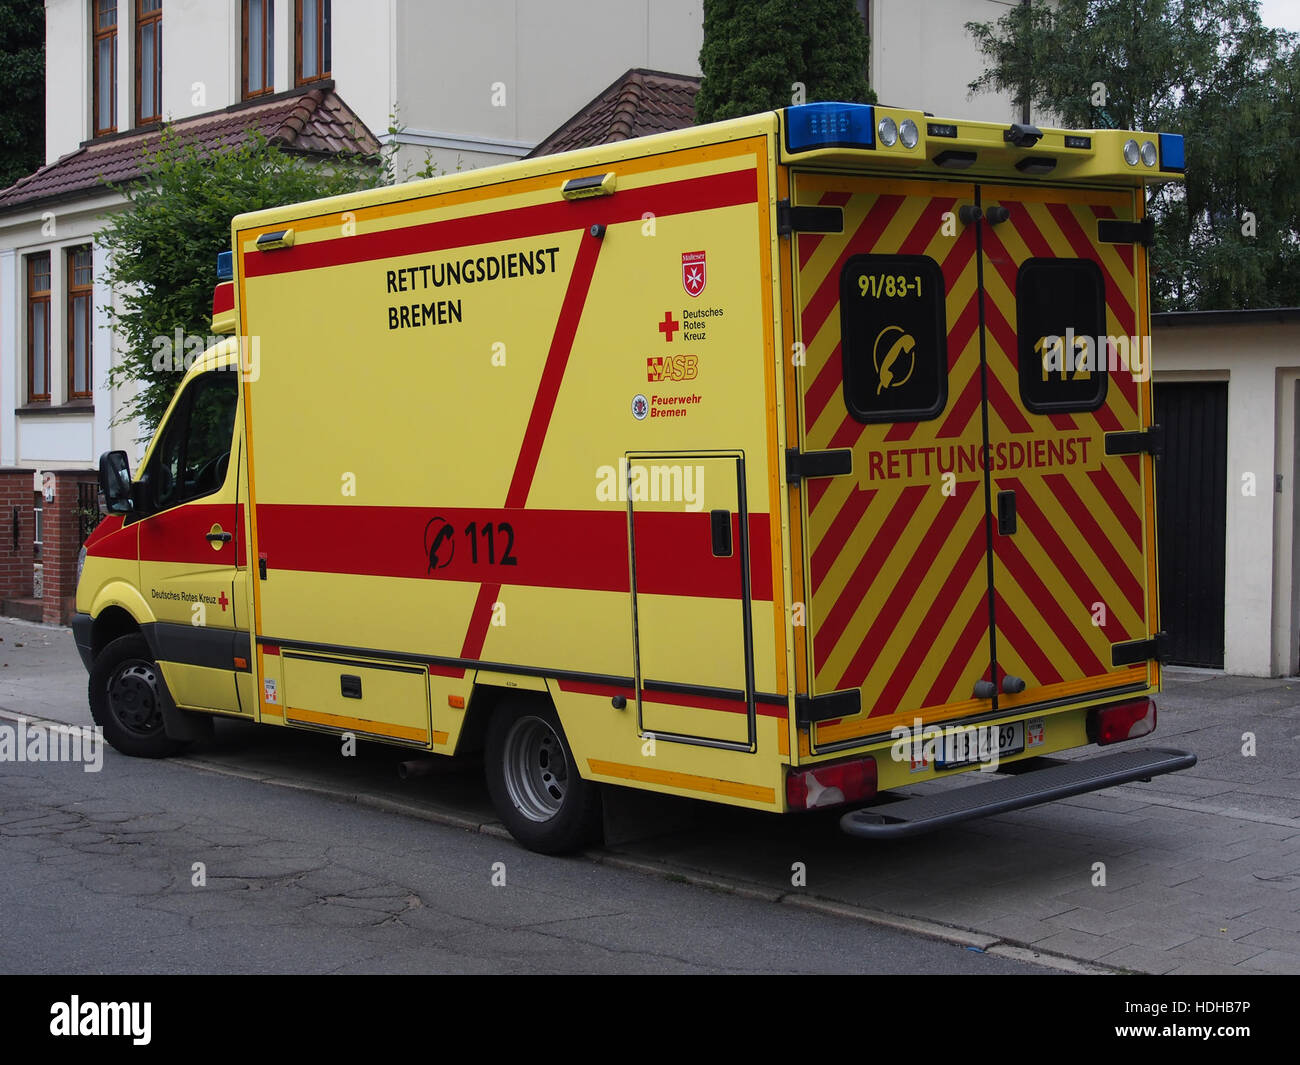 Mercedes Rettungsdienst Bremen unit 91 83-1 pic3 Stock Photo